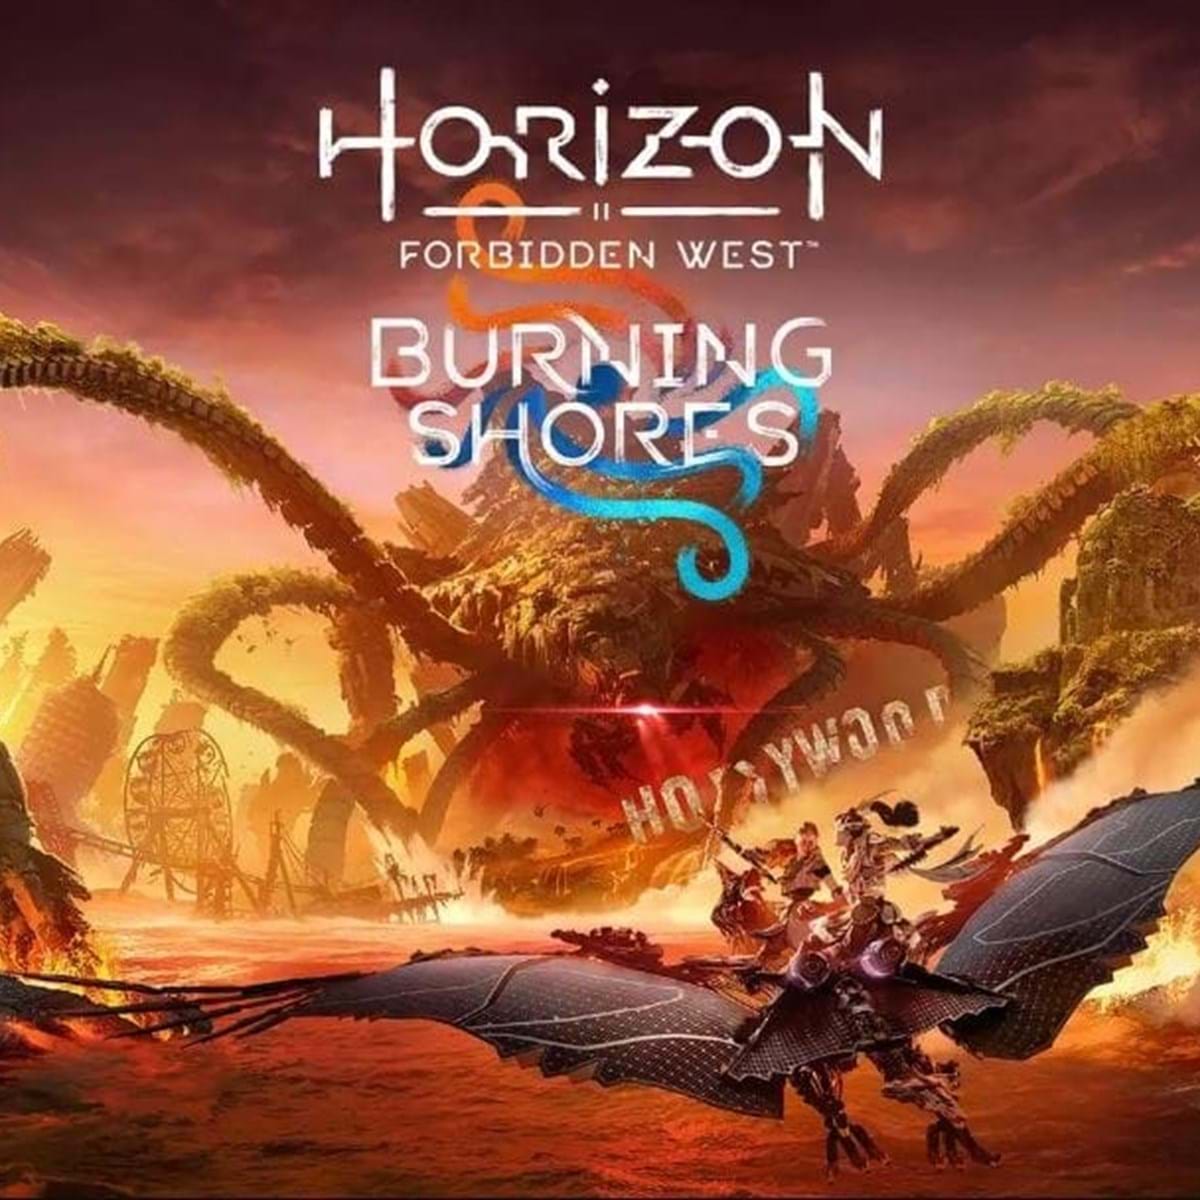 Burning Shores faz de Horizon Forbidden West o melhor exclusivo de PS5